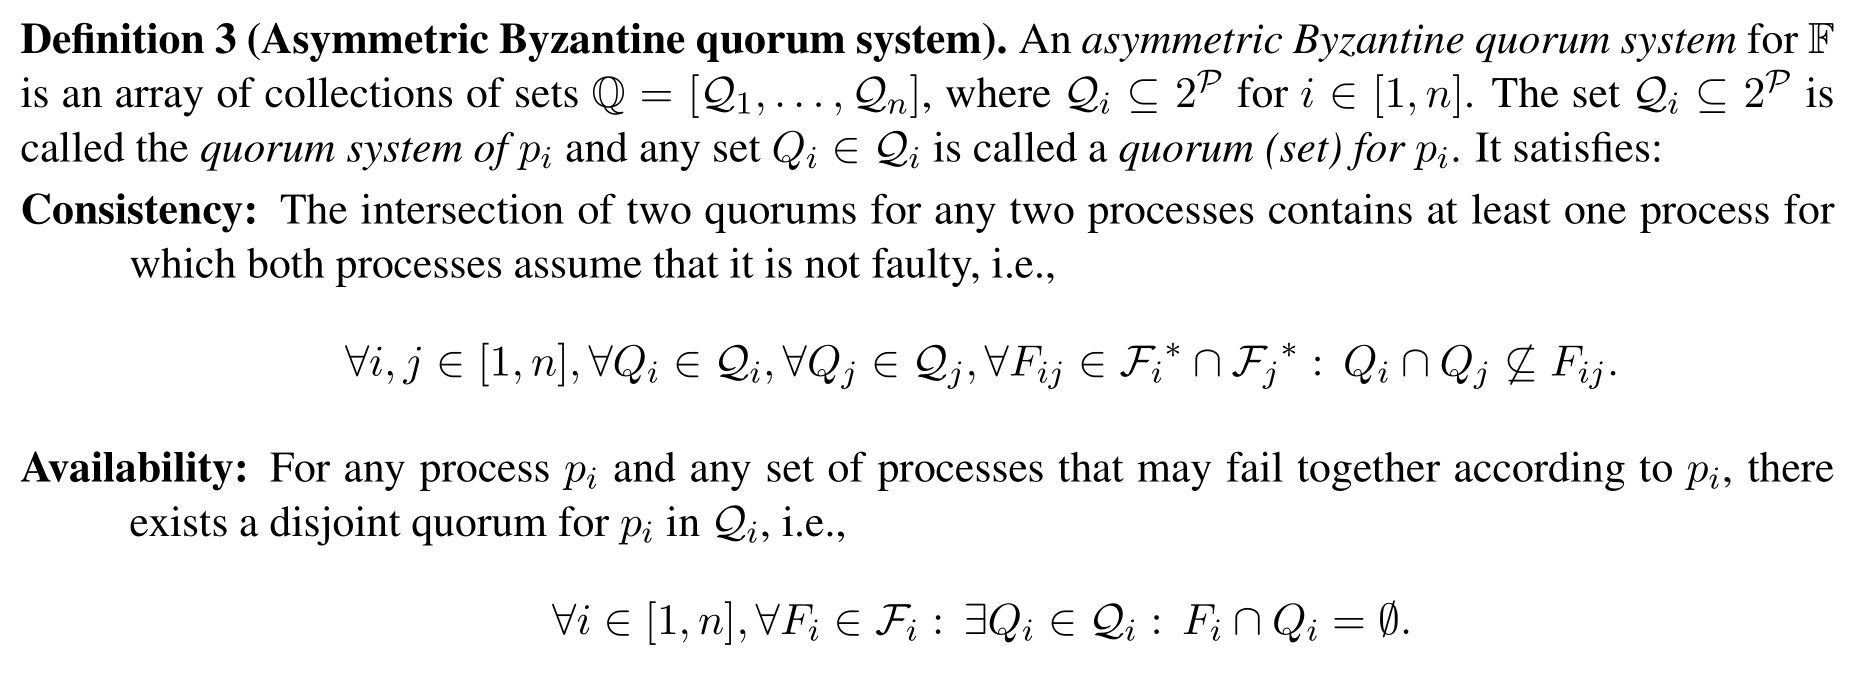 Asymmetric quorum system